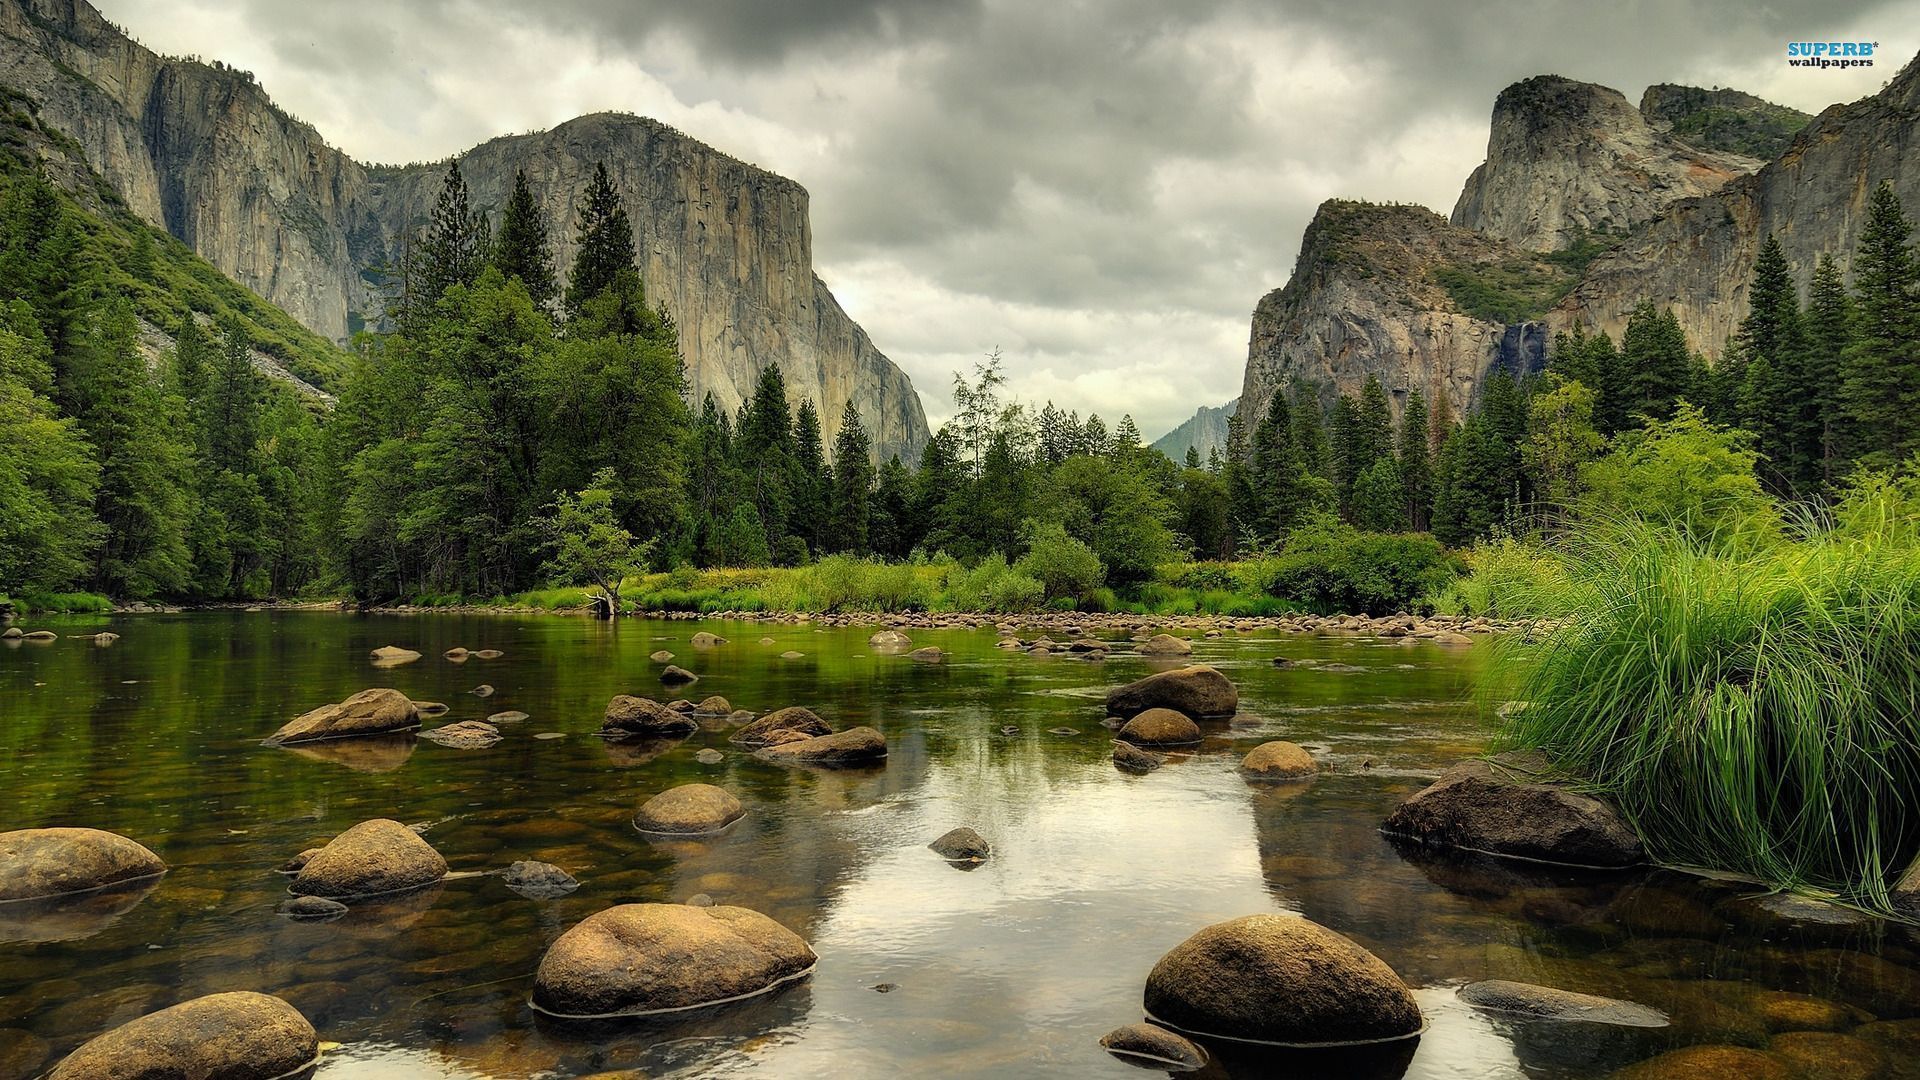 Yosemite National Park Information & Facts Tiverton Foundation